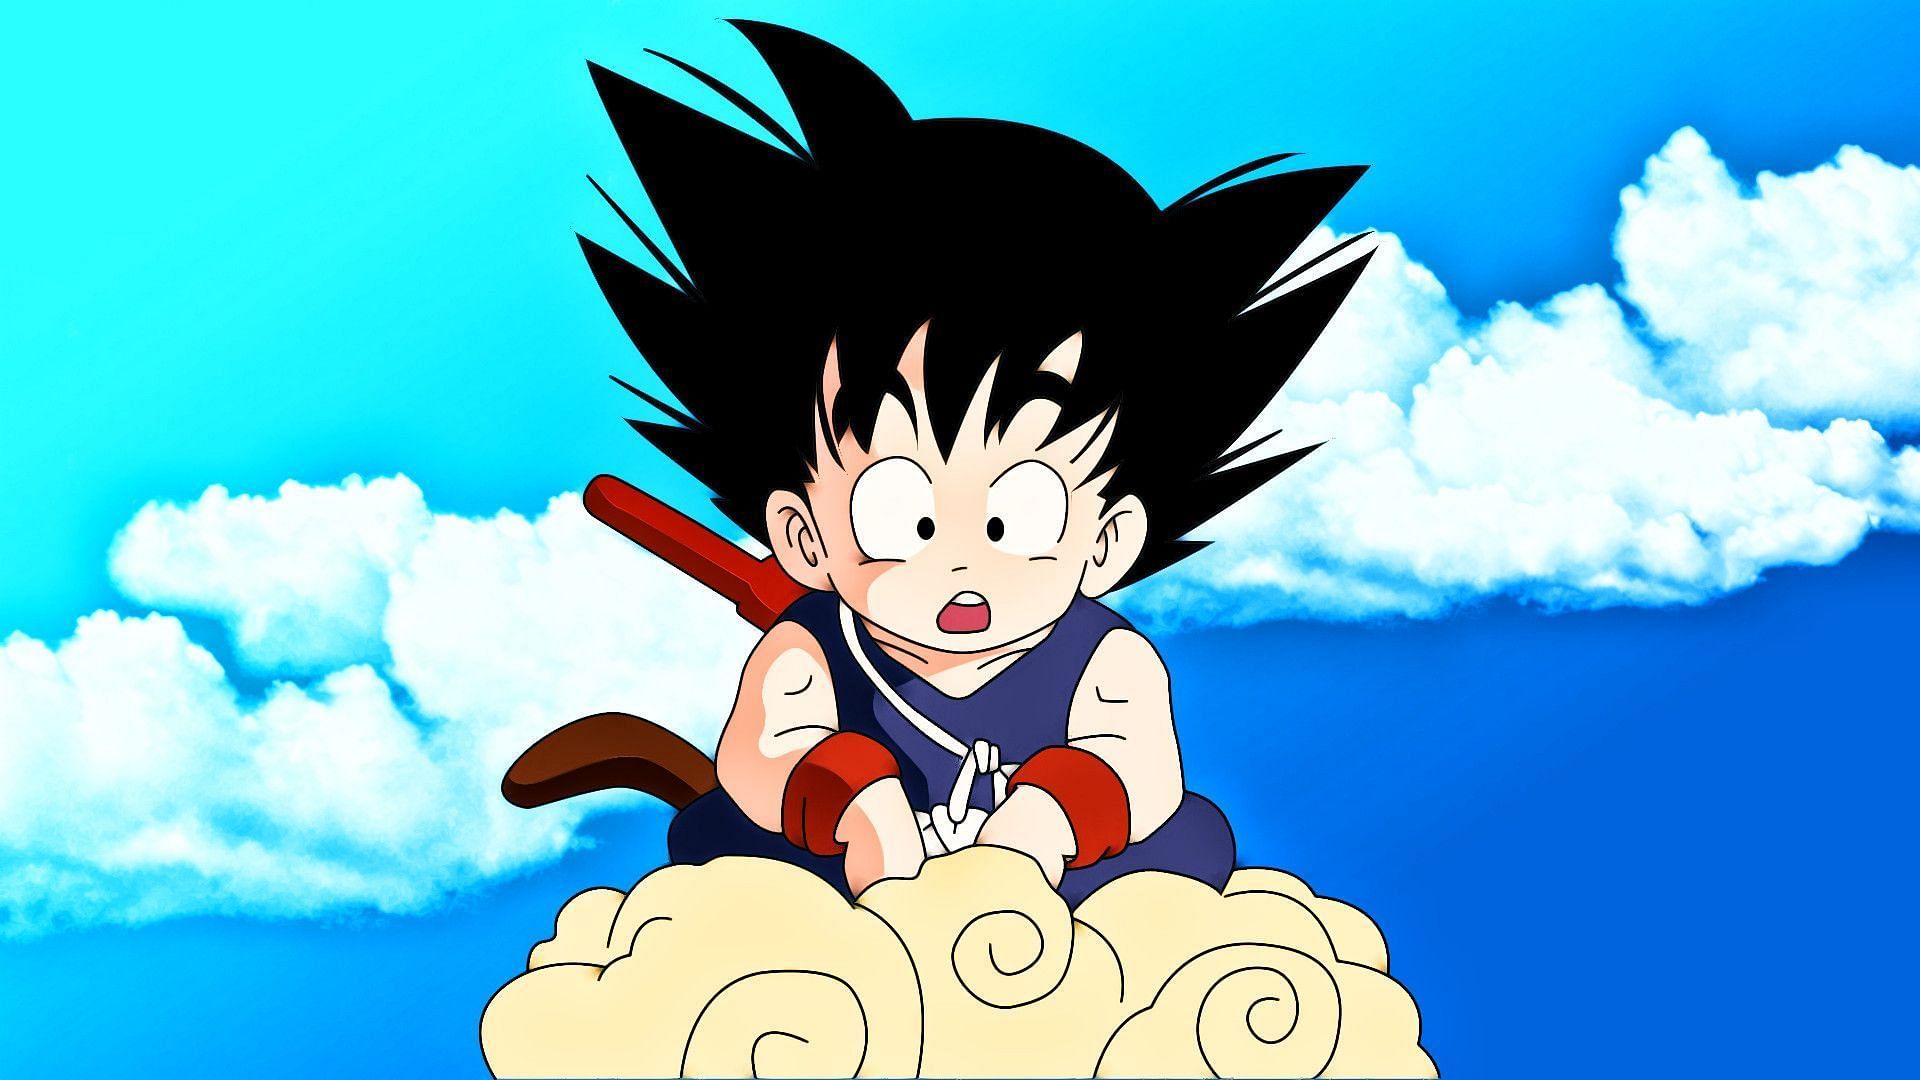 Kid Goku (Image via Toei Animation)